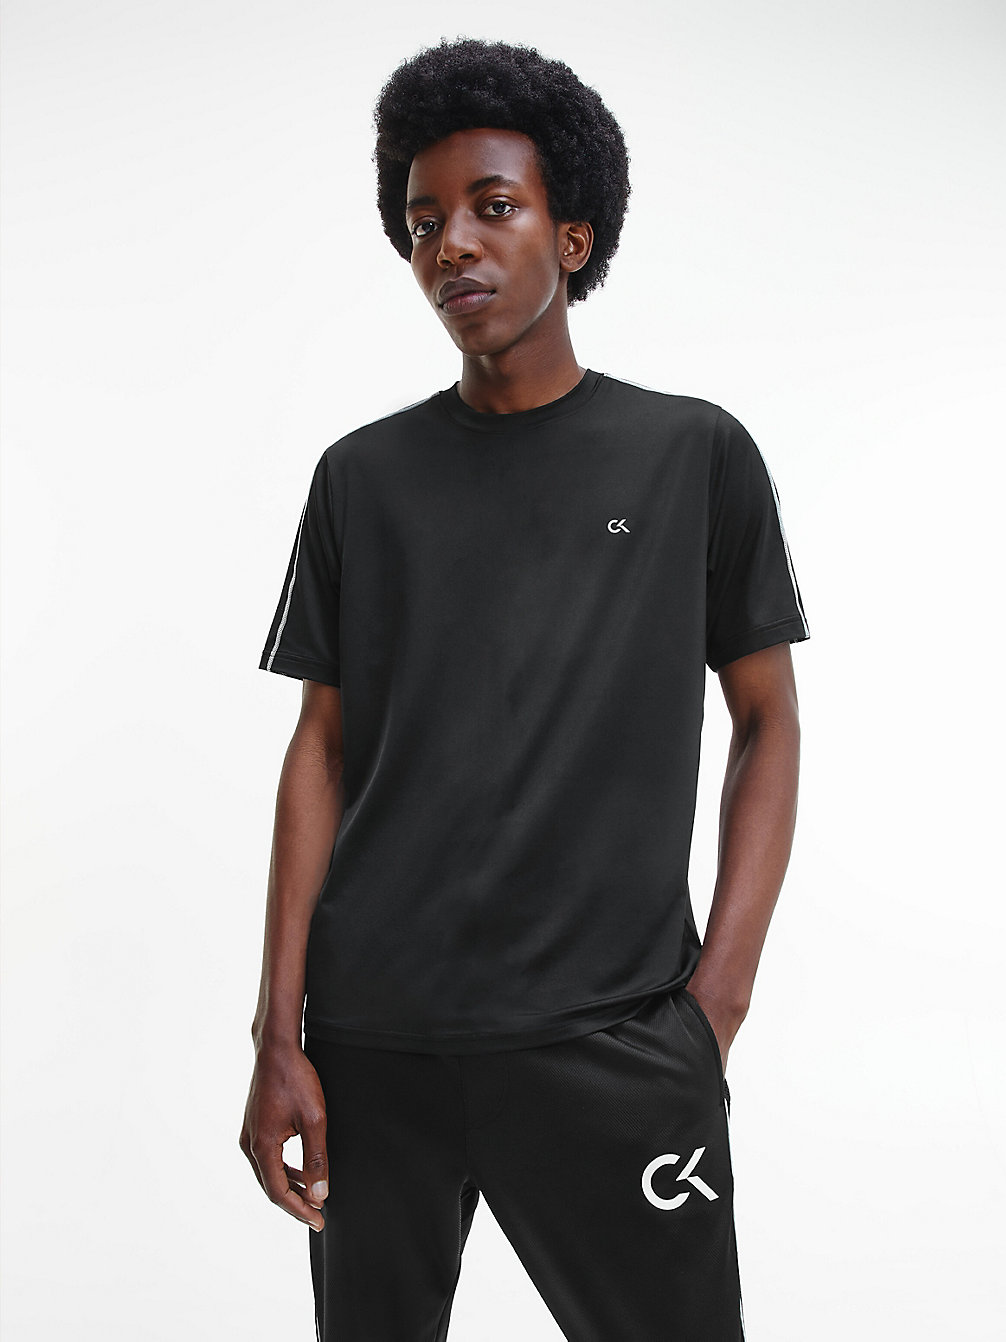 CK BLACK/ BRIGHT WHITE Recycled Polyester Gym T-Shirt undefined men Calvin Klein